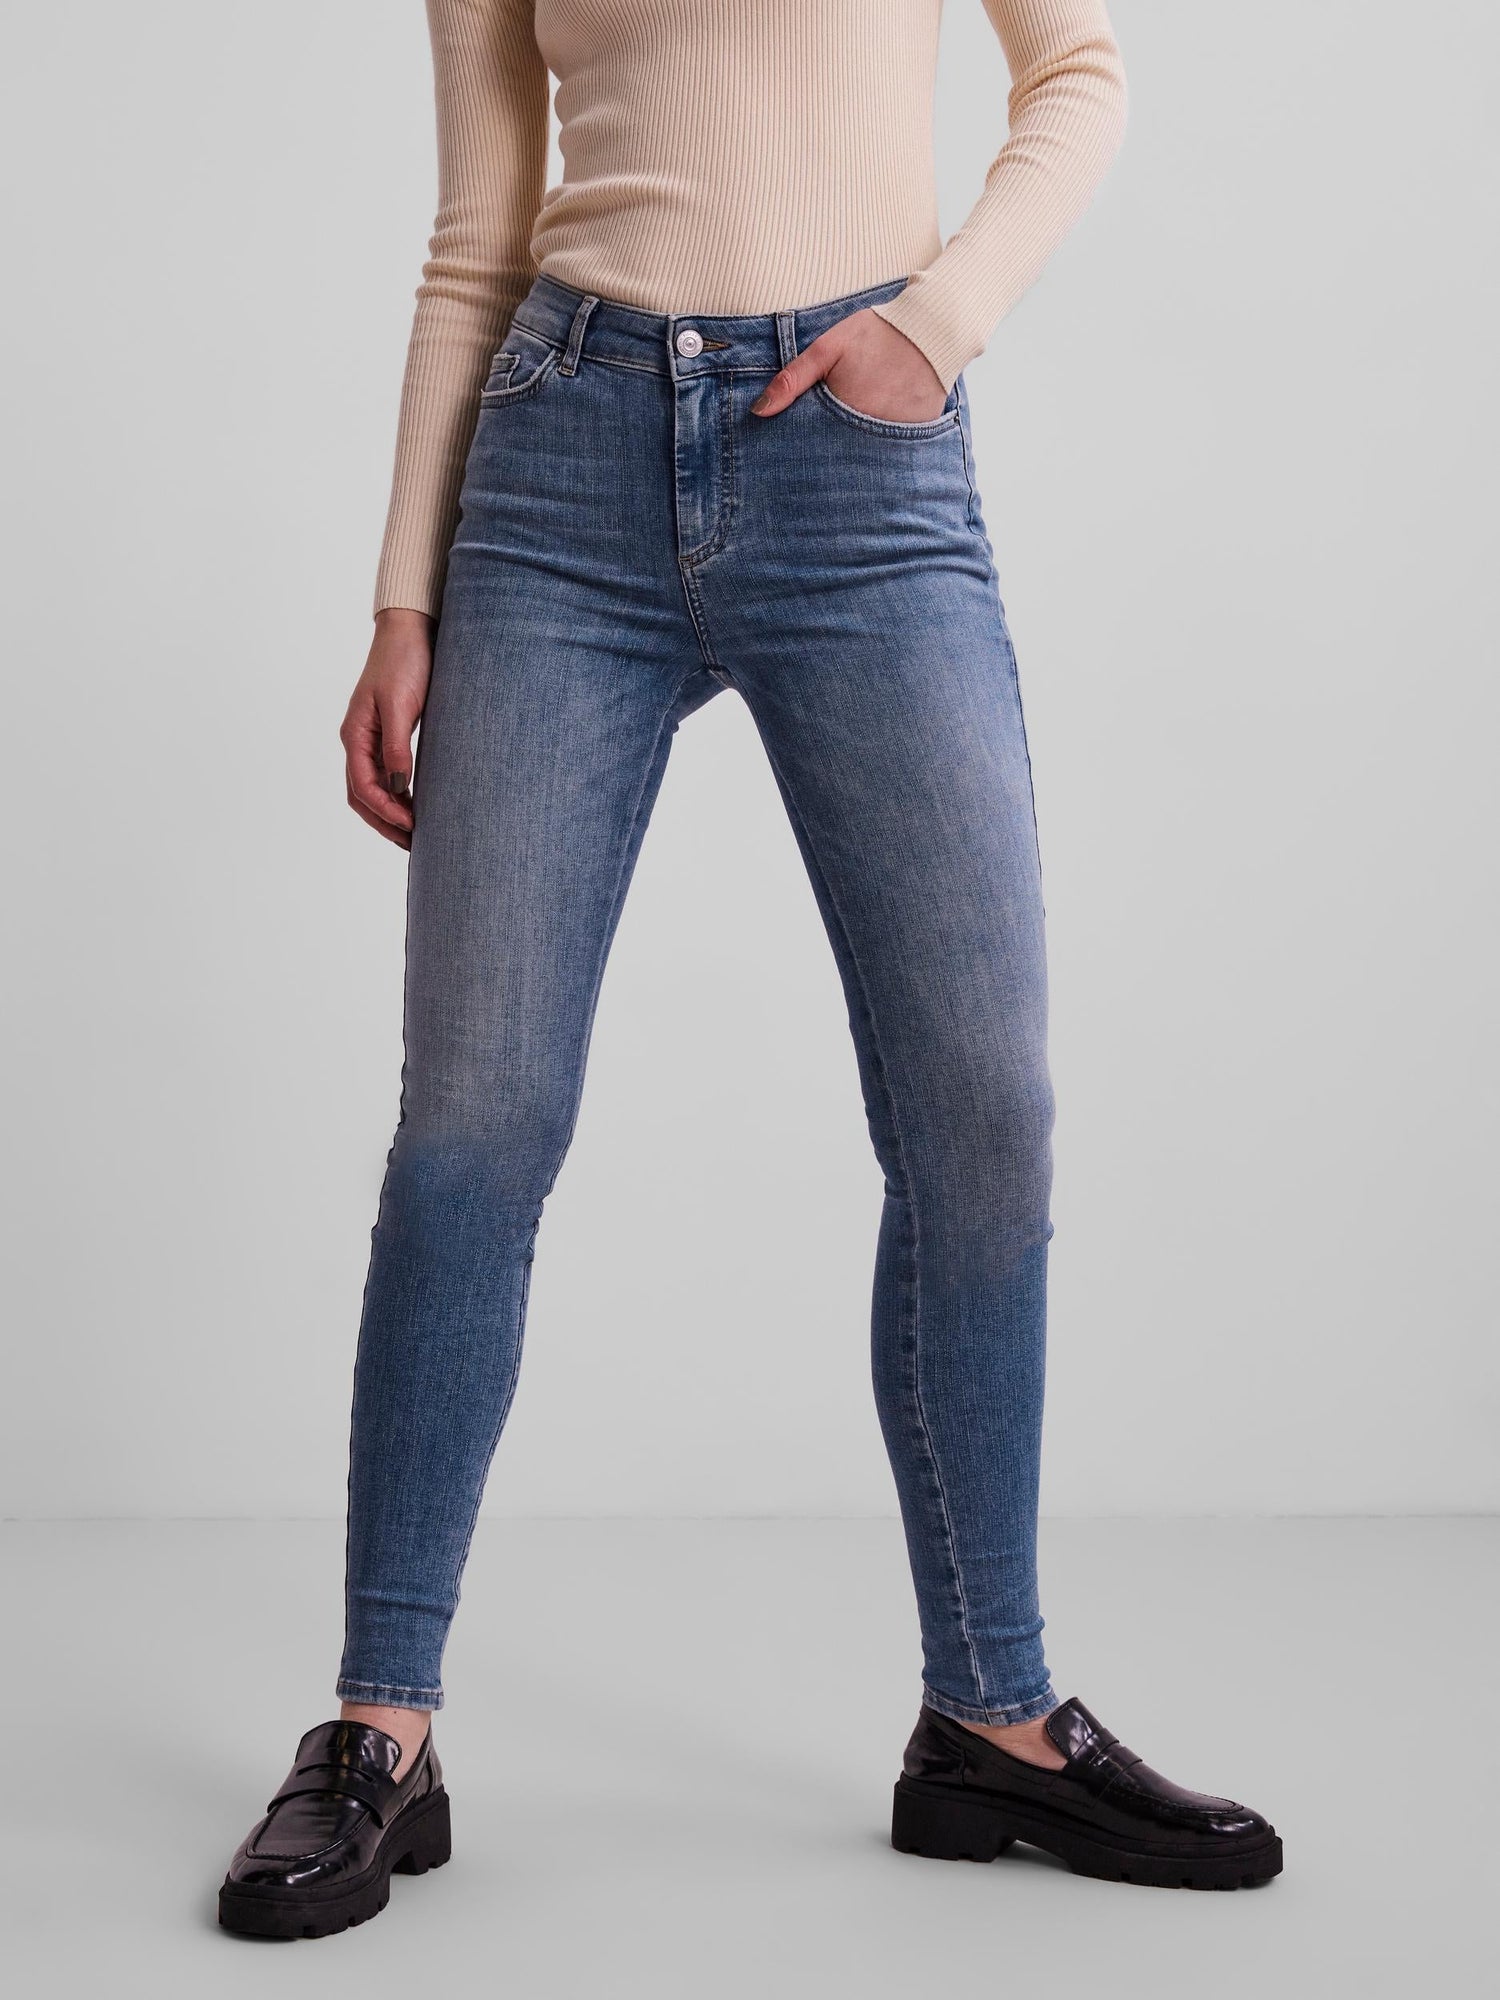 Delly Skinny Jeans | Light Blue | Petite Pants Pieces S - UK 8 